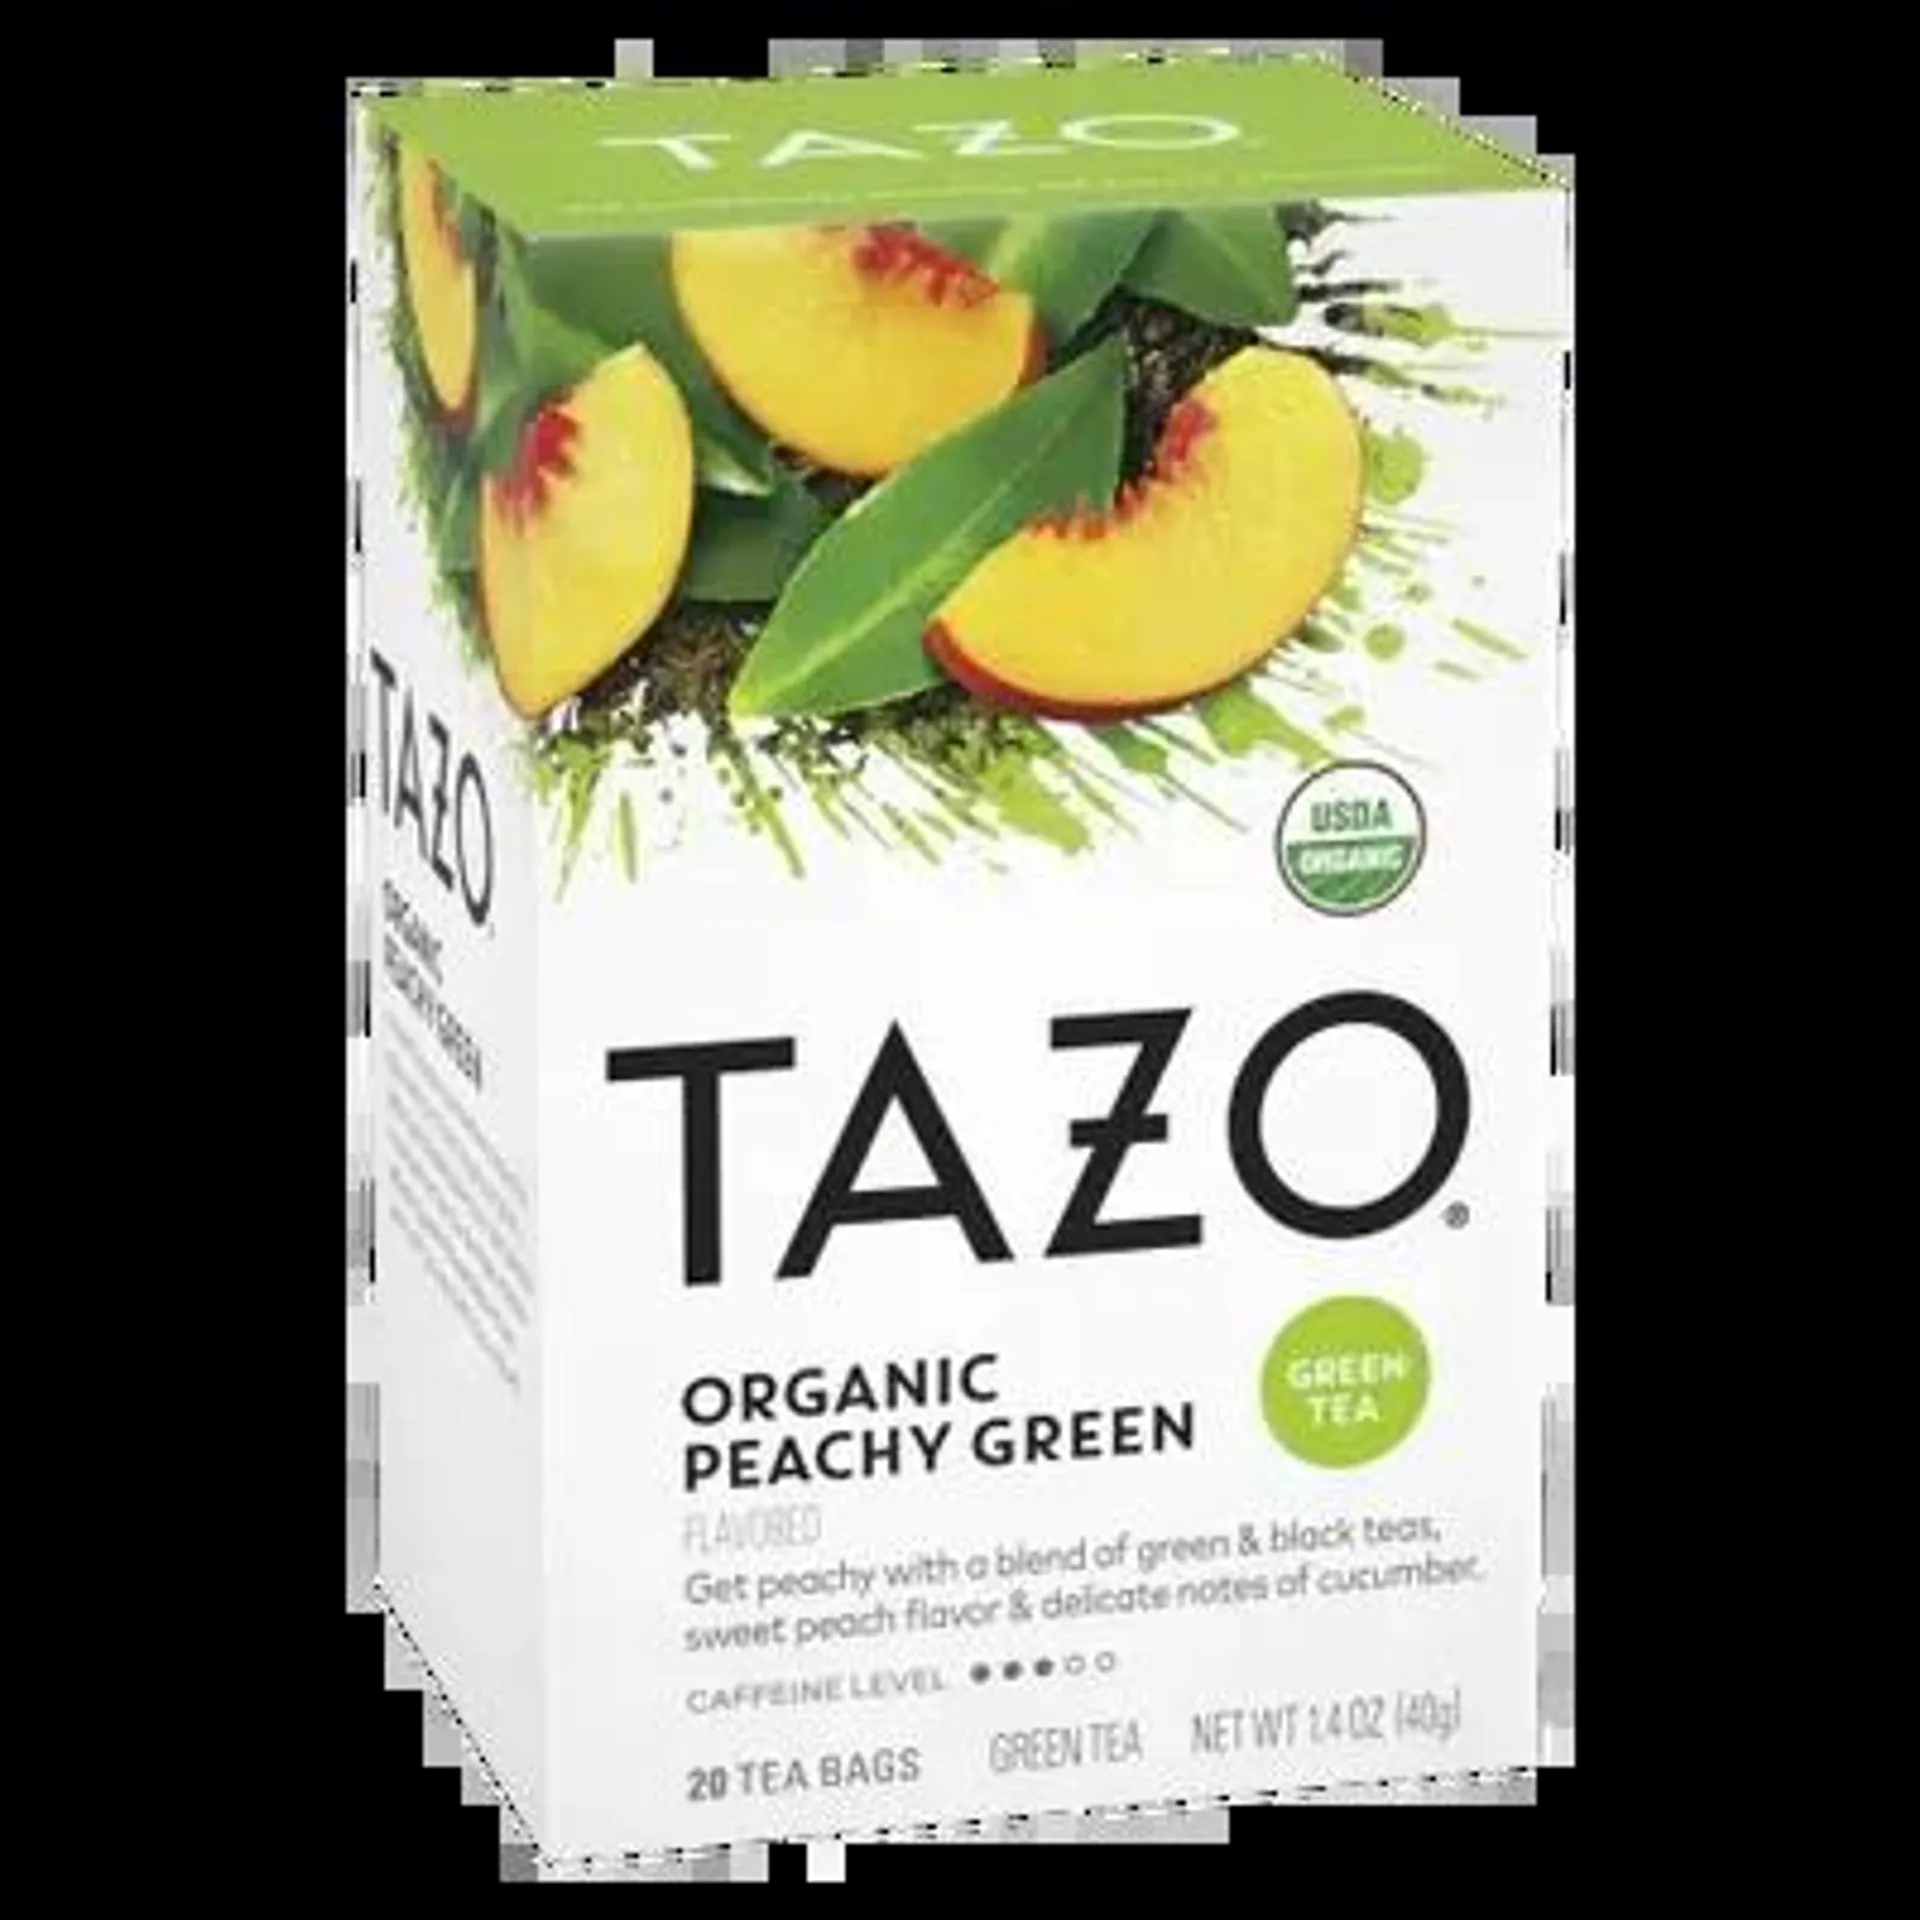 Tazo Organic Peachy Green Tea